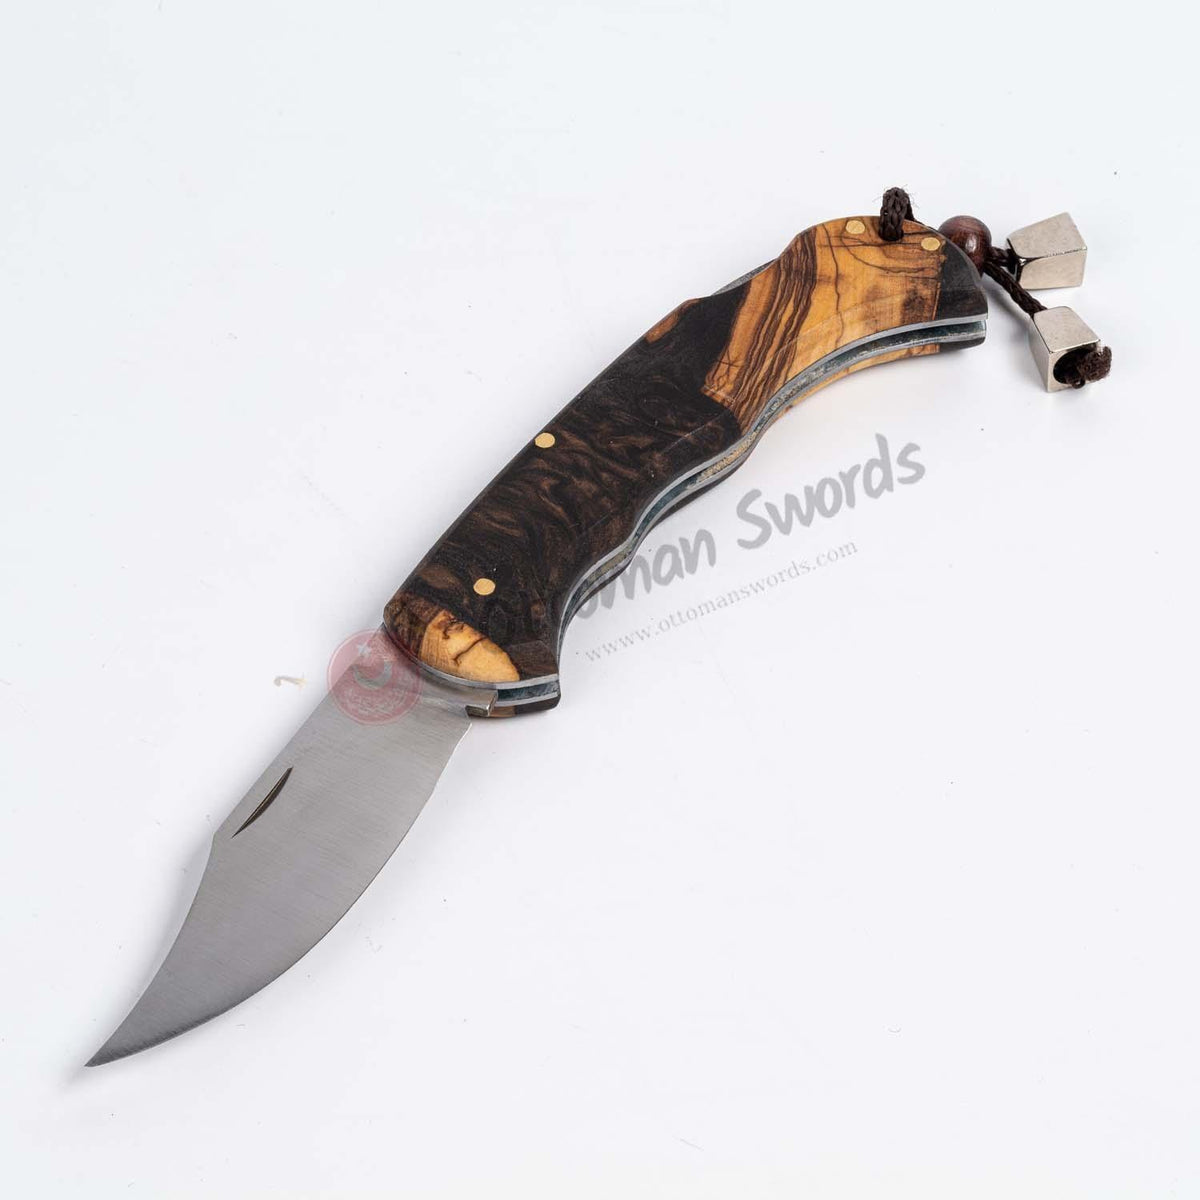 Olive-tree Handle LockBack Folding Knife 3.5 İnches Blade (1)